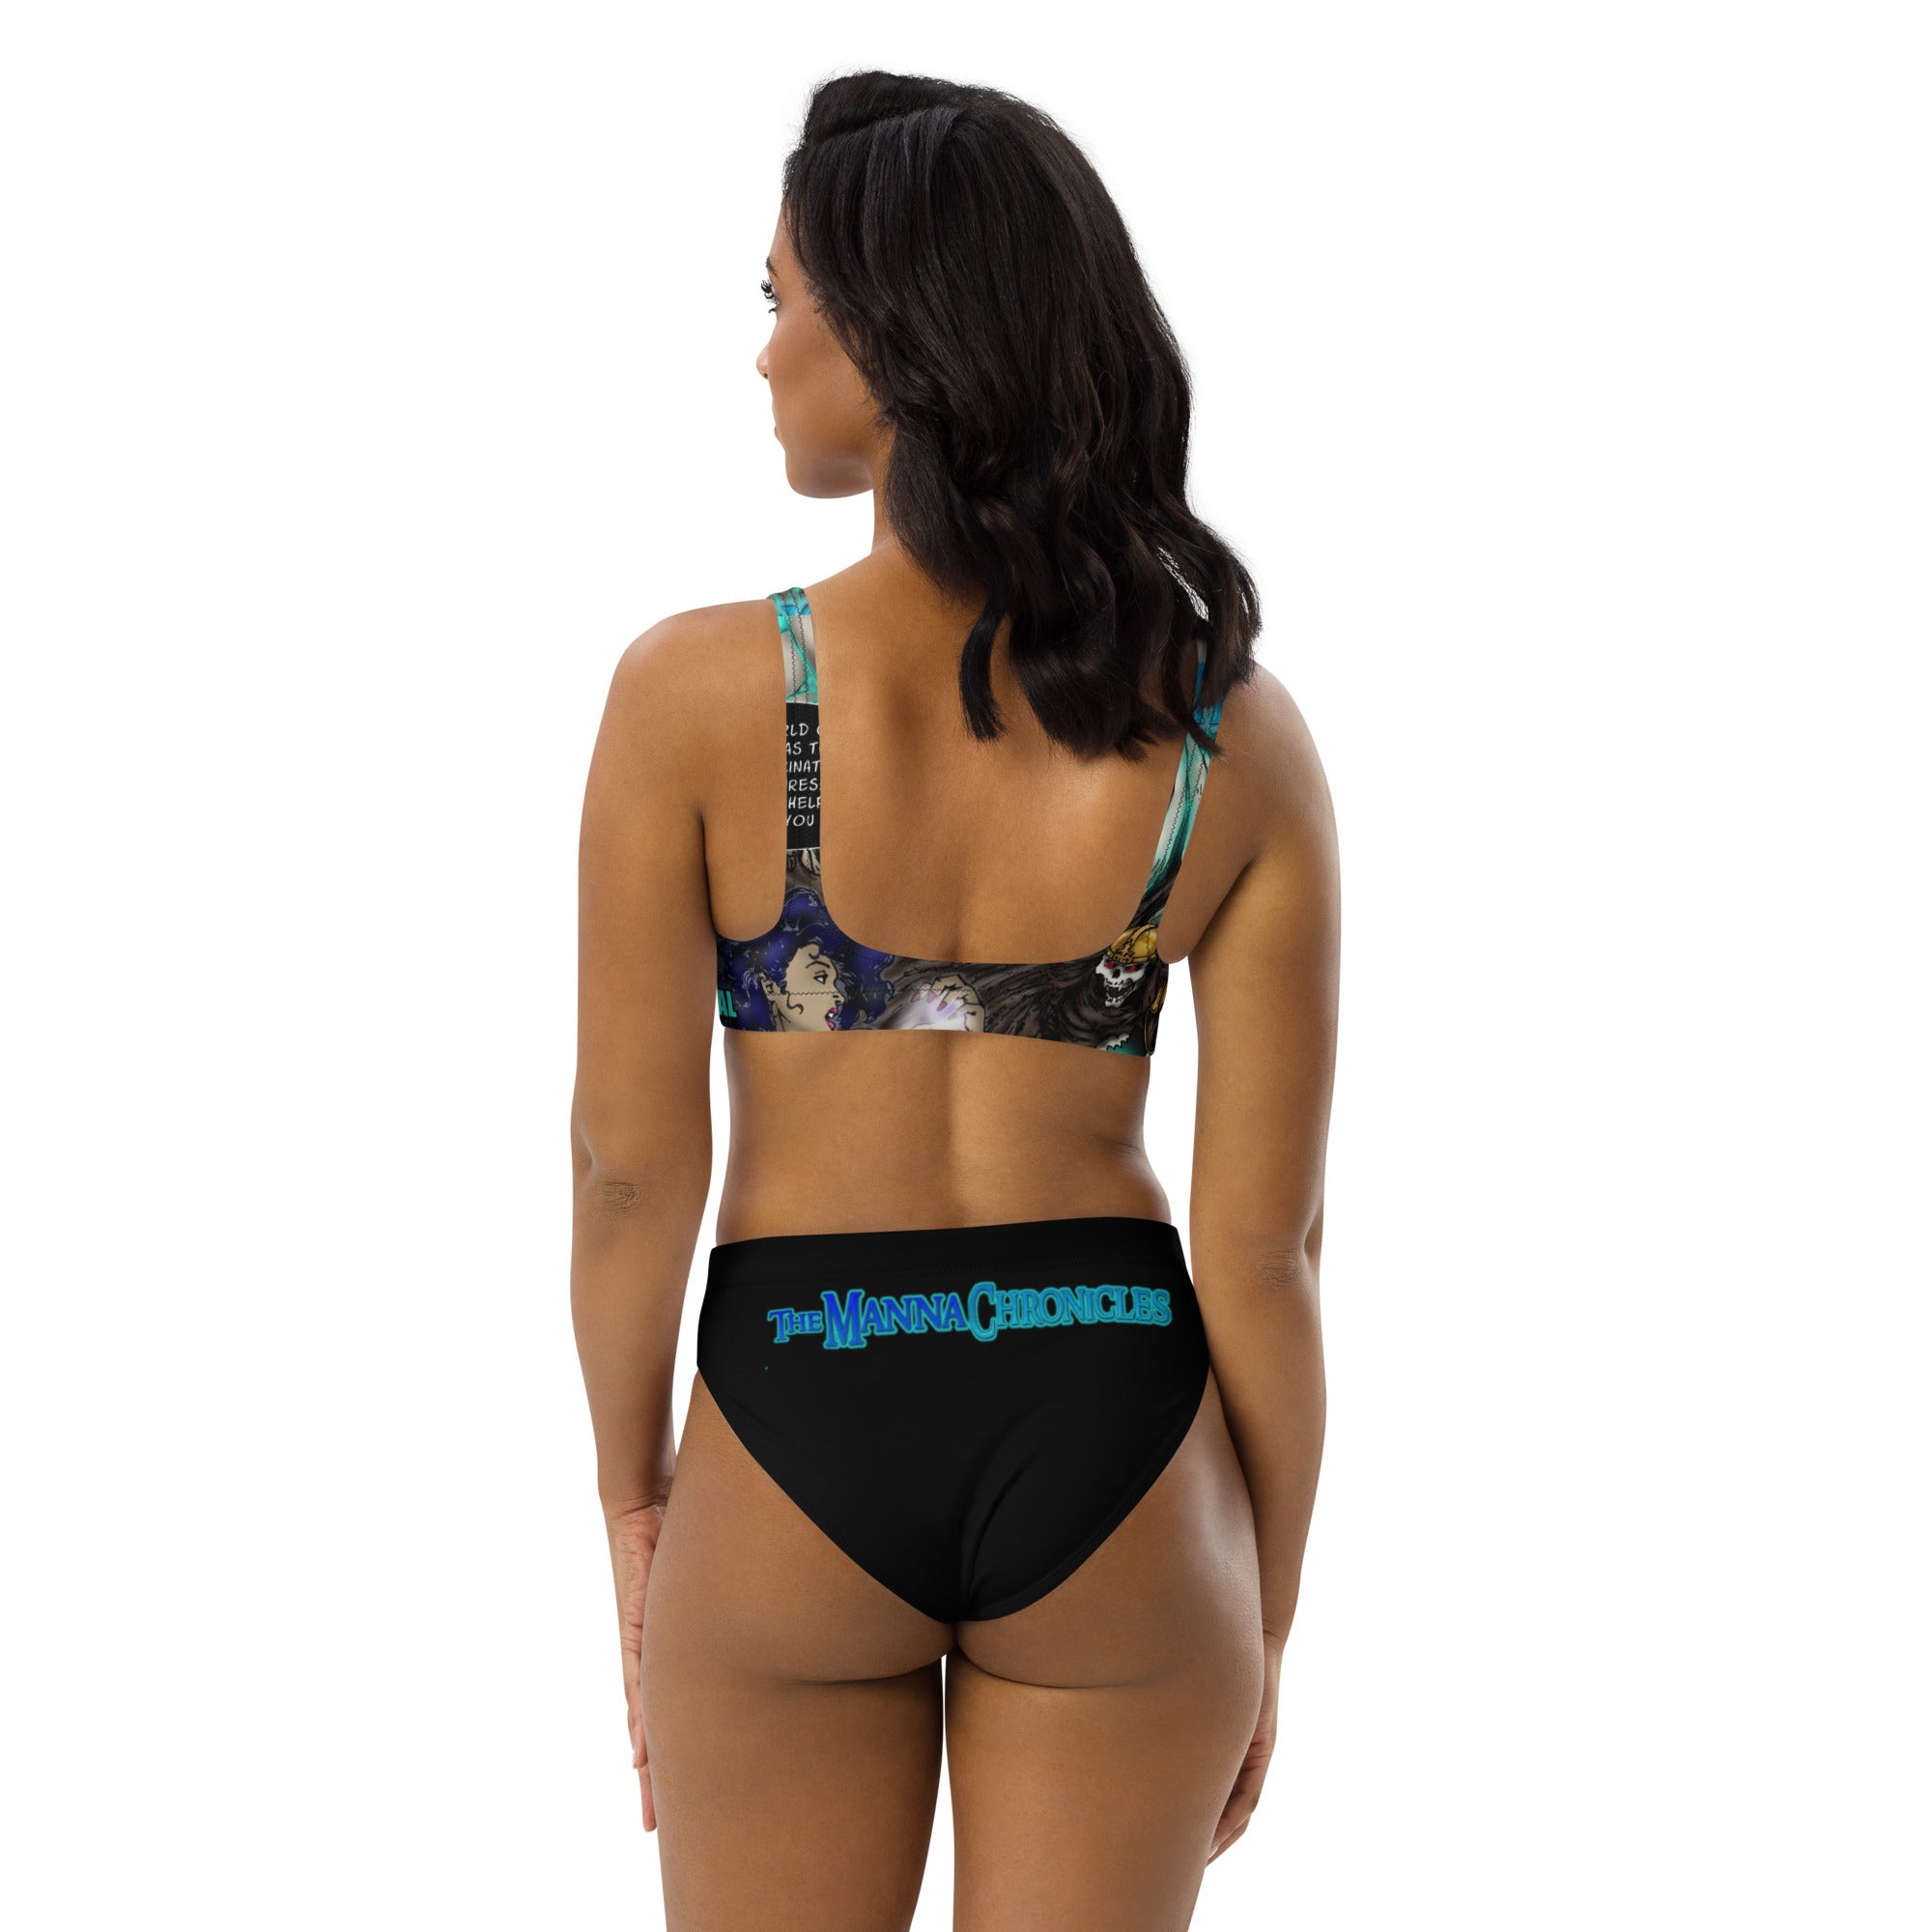 SANDRA VS LICH Recycled high-waisted bikini